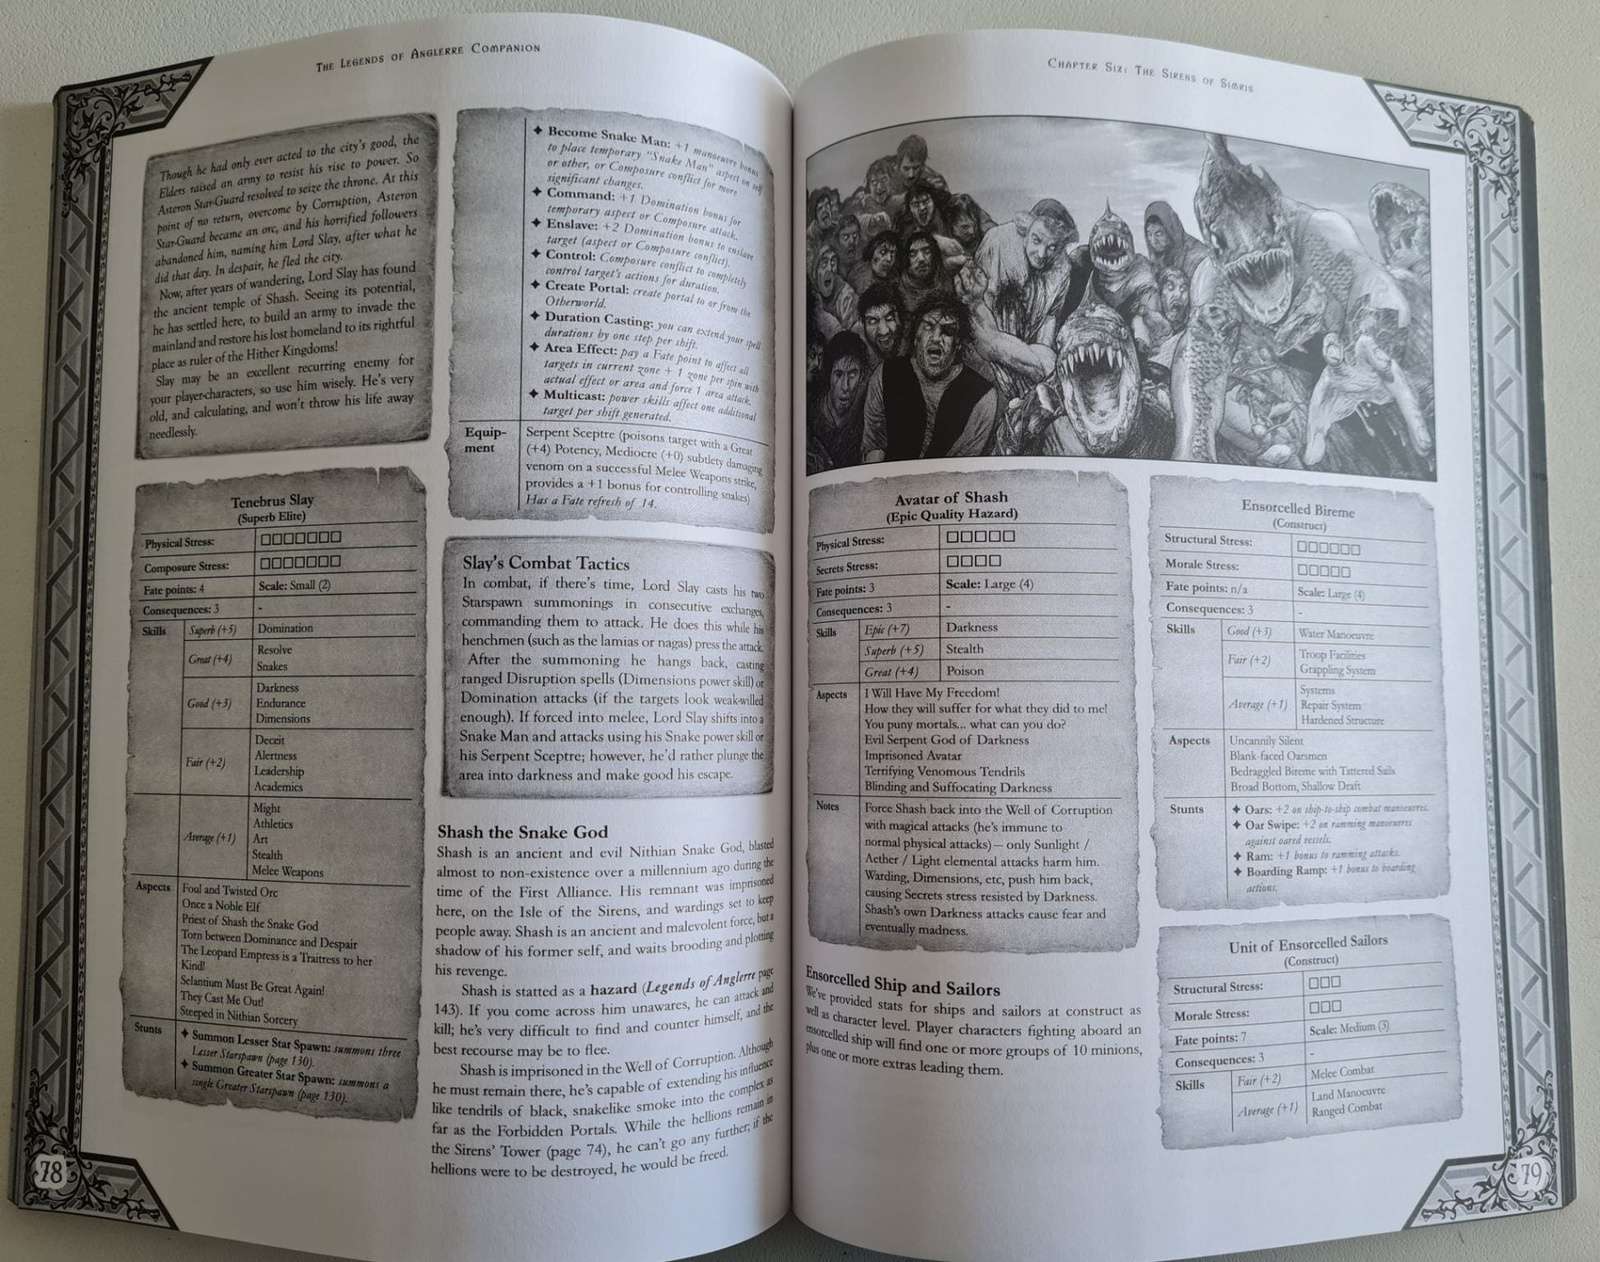 Legends of Anglerre: Companion Book Default Title